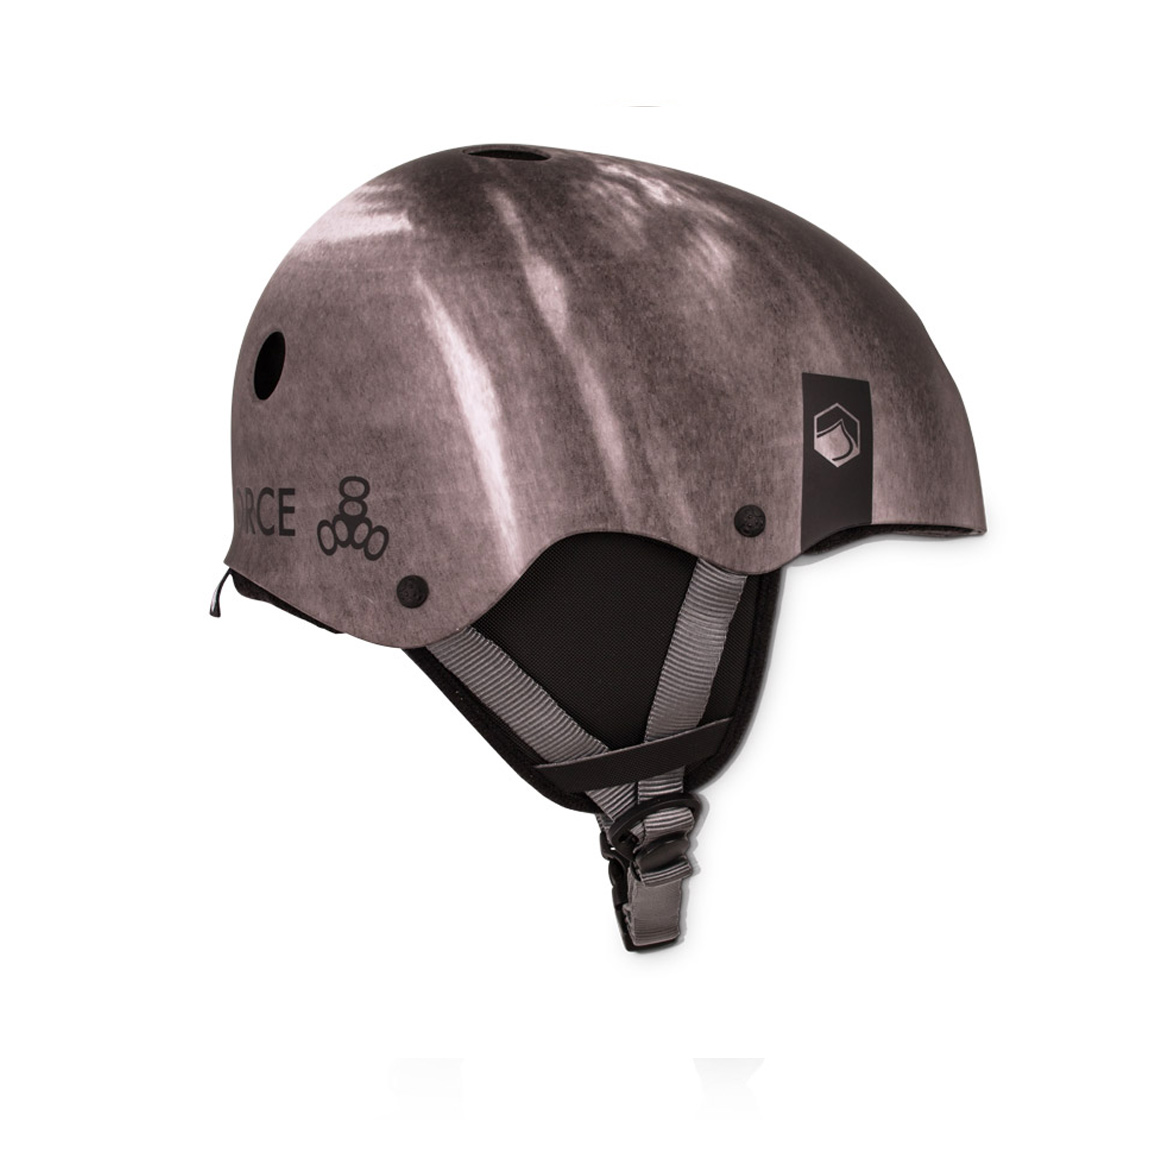 Liquid Force Flash helmet with ear flaps – haze